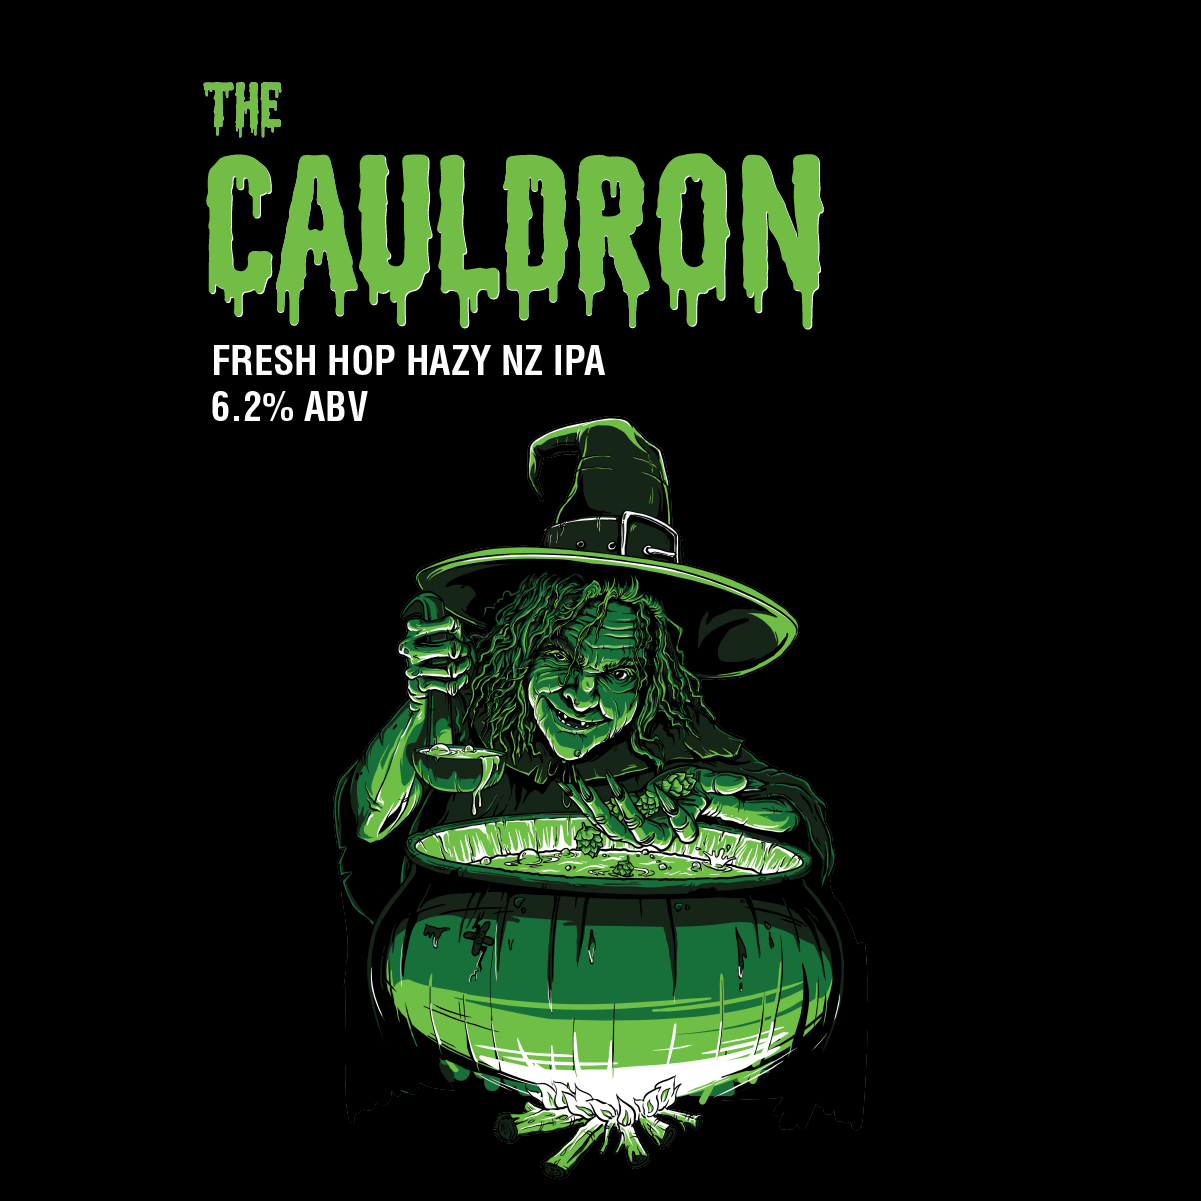 THE CAULDRON - Fresh Hop Hazy NZ IPA